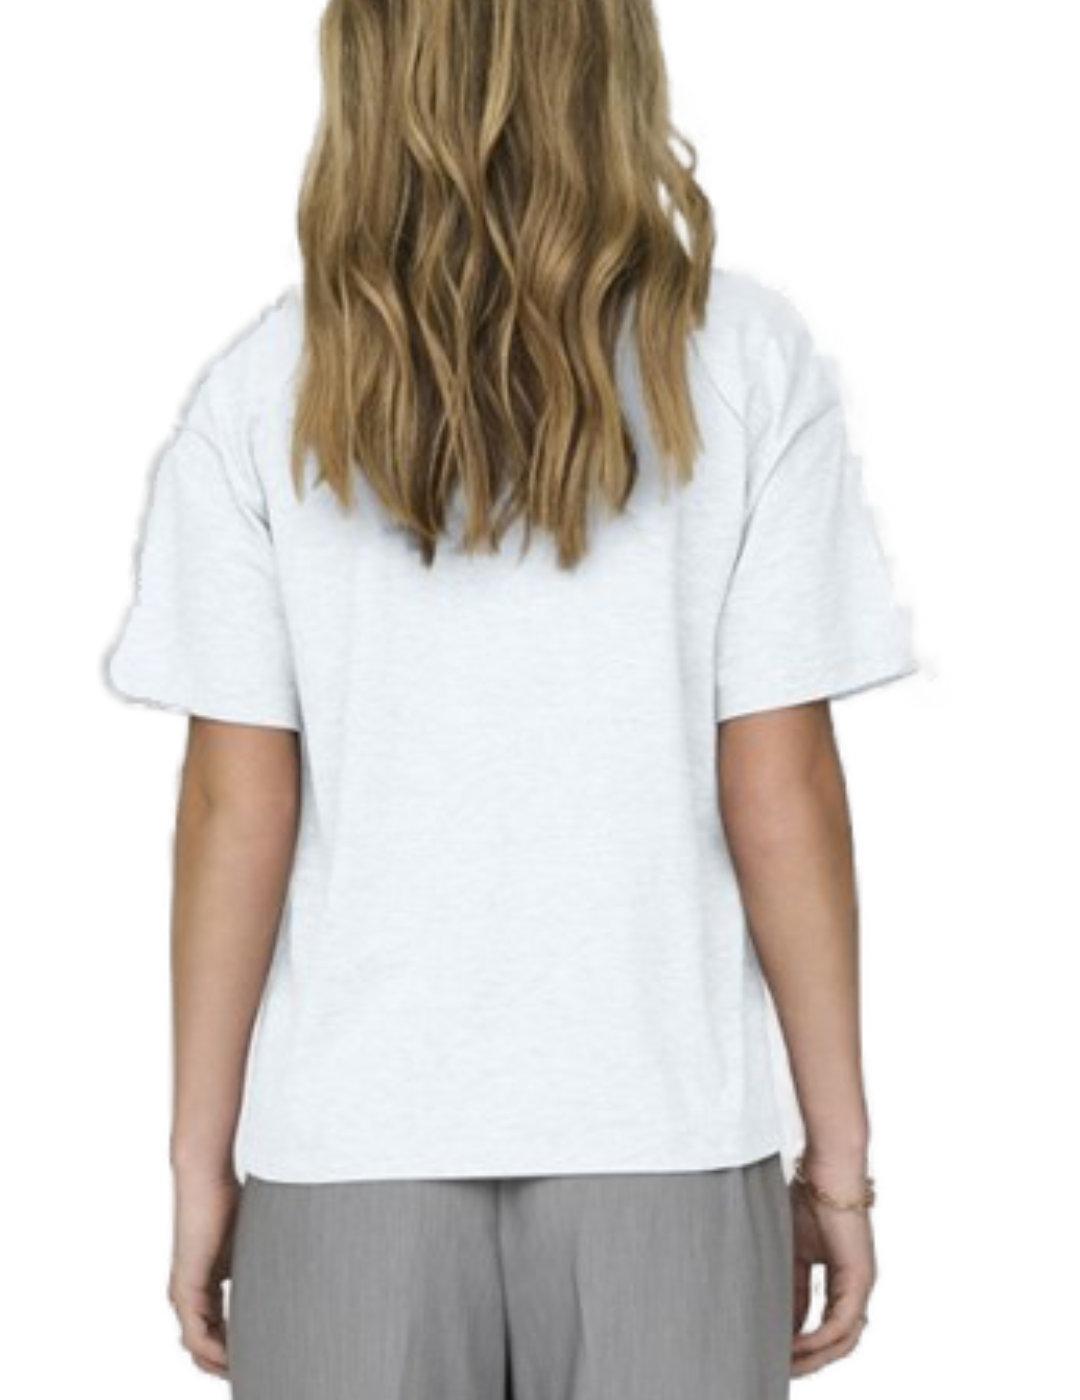 Camiseta Only Laura blanco holgada manga corta para mujer